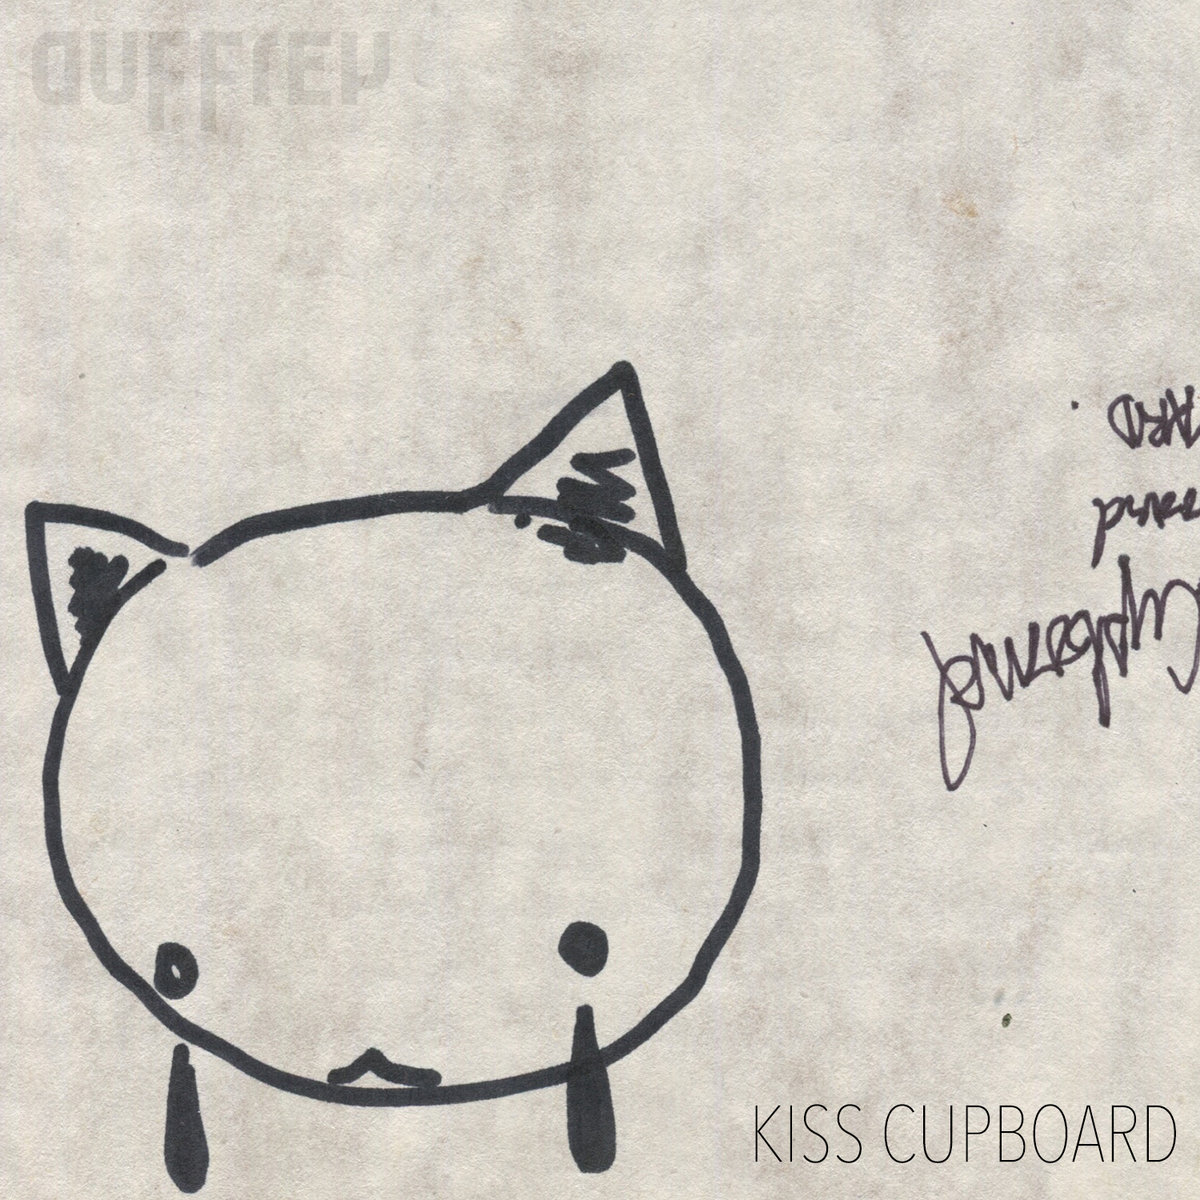 Duffrey - Oxytocin @ 'Kiss Cupboard' album (bass, electronic)